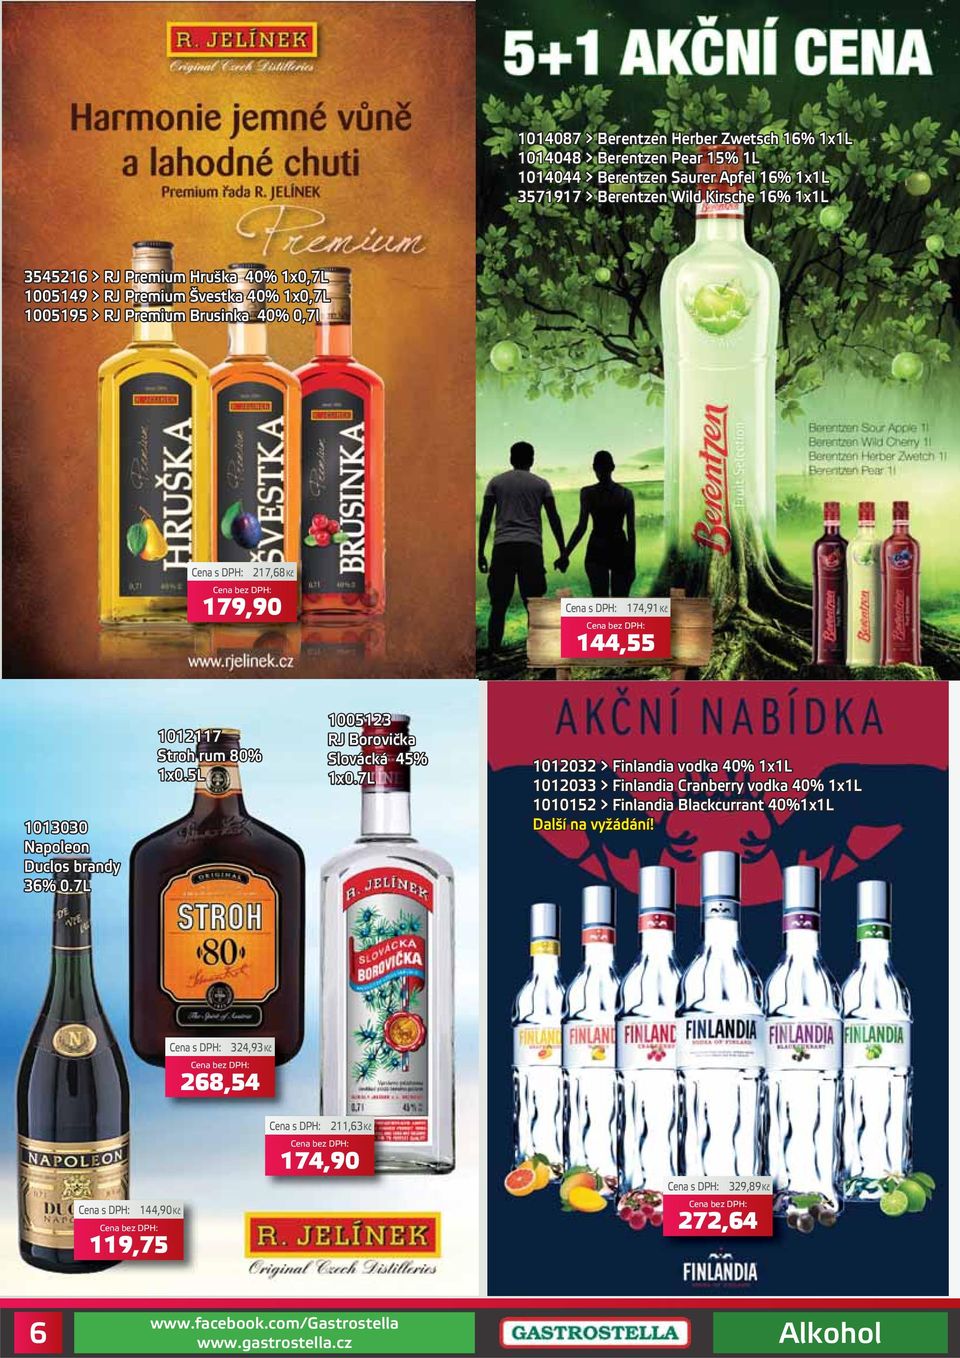 1013030 Napoleon Duclos brandy 36% 0.7L 1012117 Stroh rum 80% 1x0.5L 1005123 RJ Borovička Slovácká 45% 1x0.